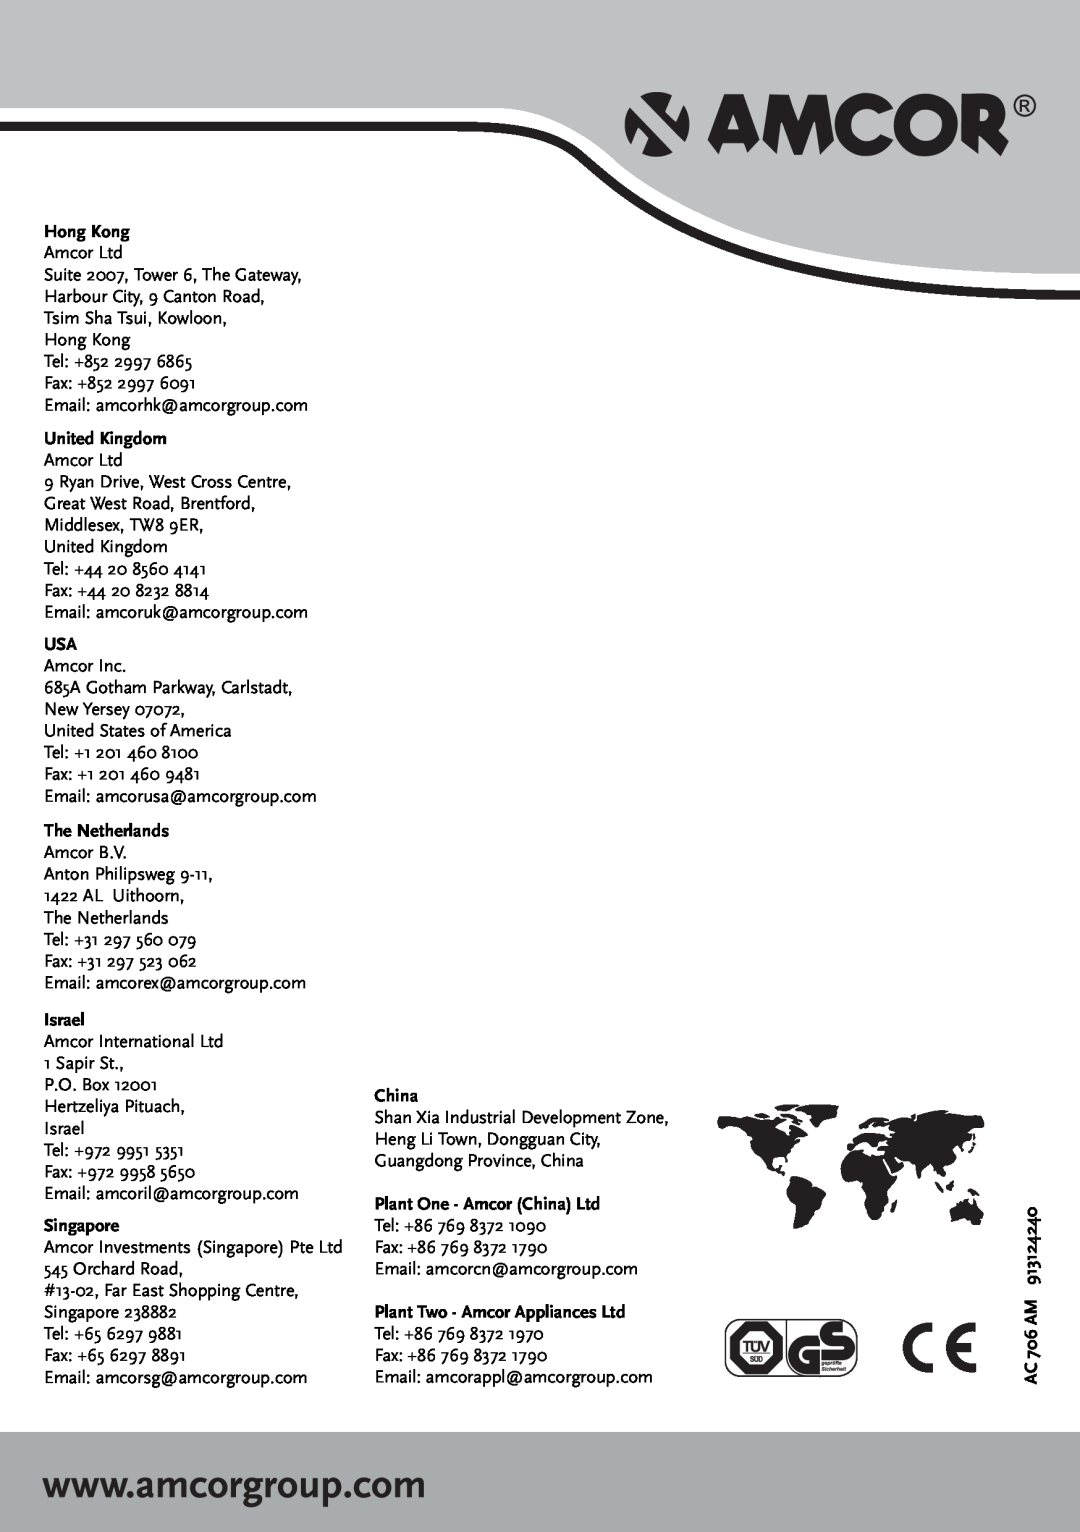 Amcor AC 706 AM manual Hong Kong, United Kingdom, The Netherlands, Israel, Singapore, China 